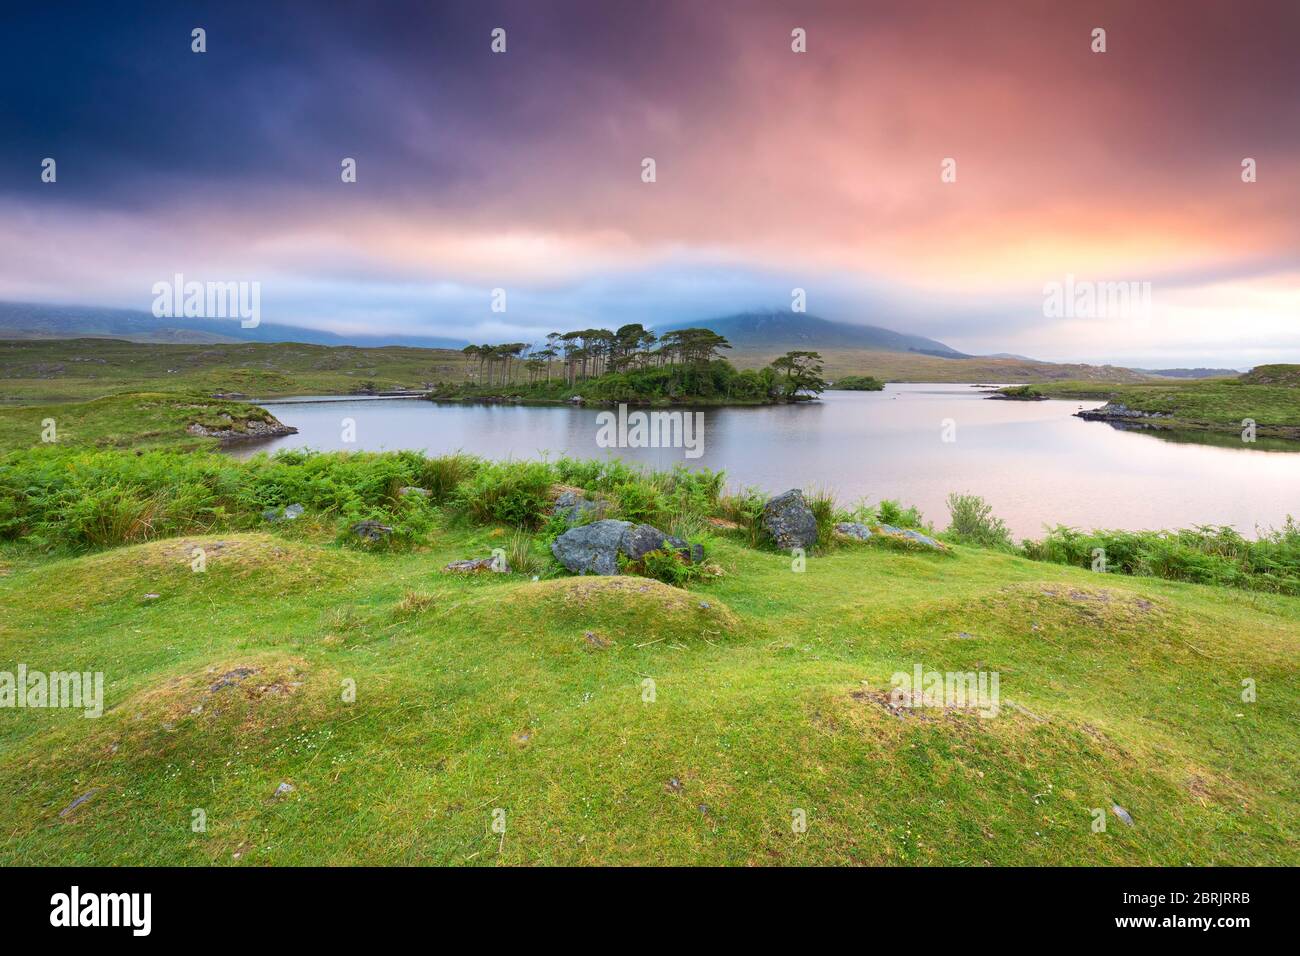 Vista dell'Isola di Pine sul lago Derryclare. Pine Island, Connemara National Park, County Galway, Connecht provincia, Inagh Valley, Irlanda. Foto Stock